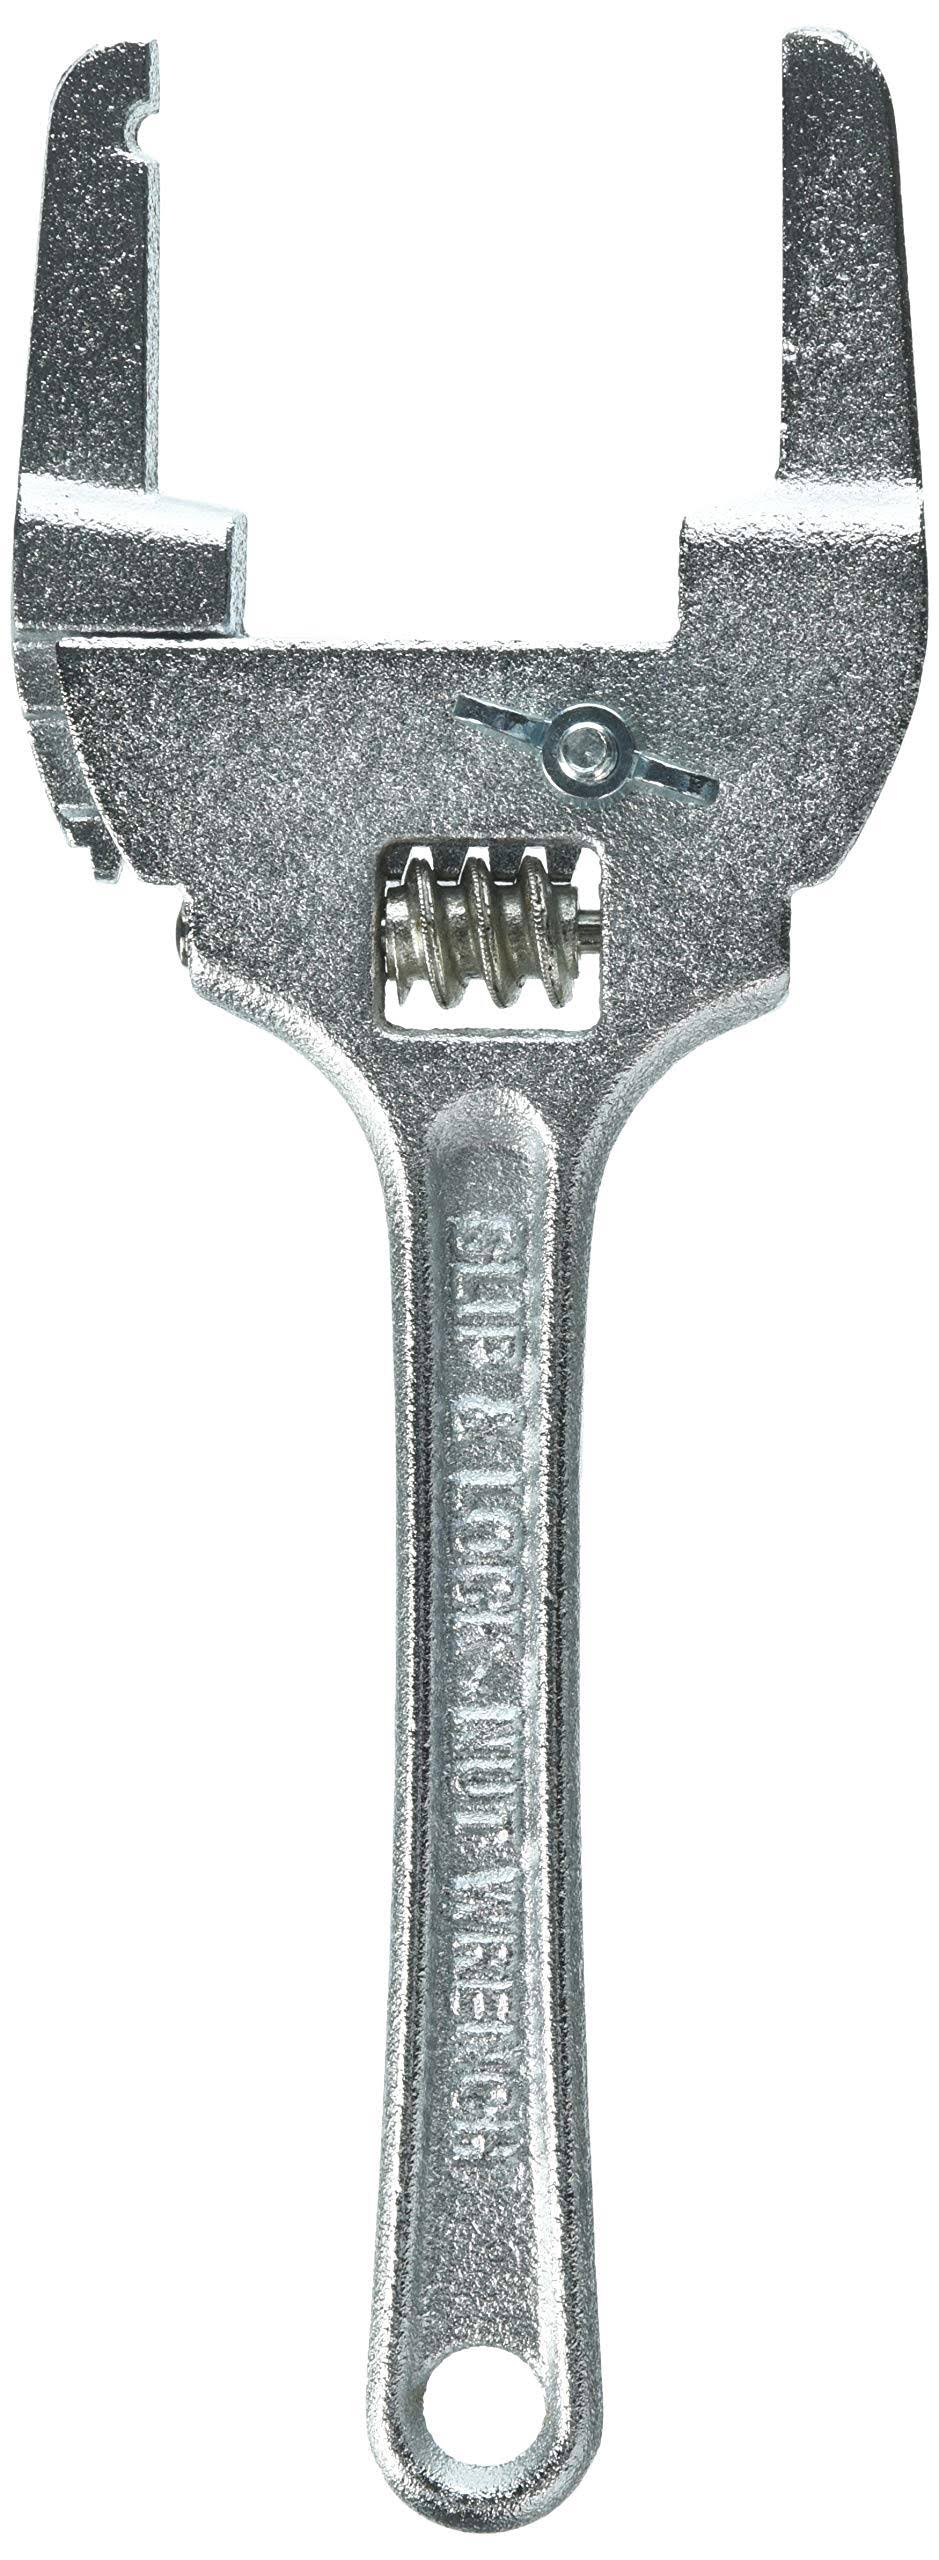 Mint Craft T1523l Adjustable Slip Nut Wrench - 4"